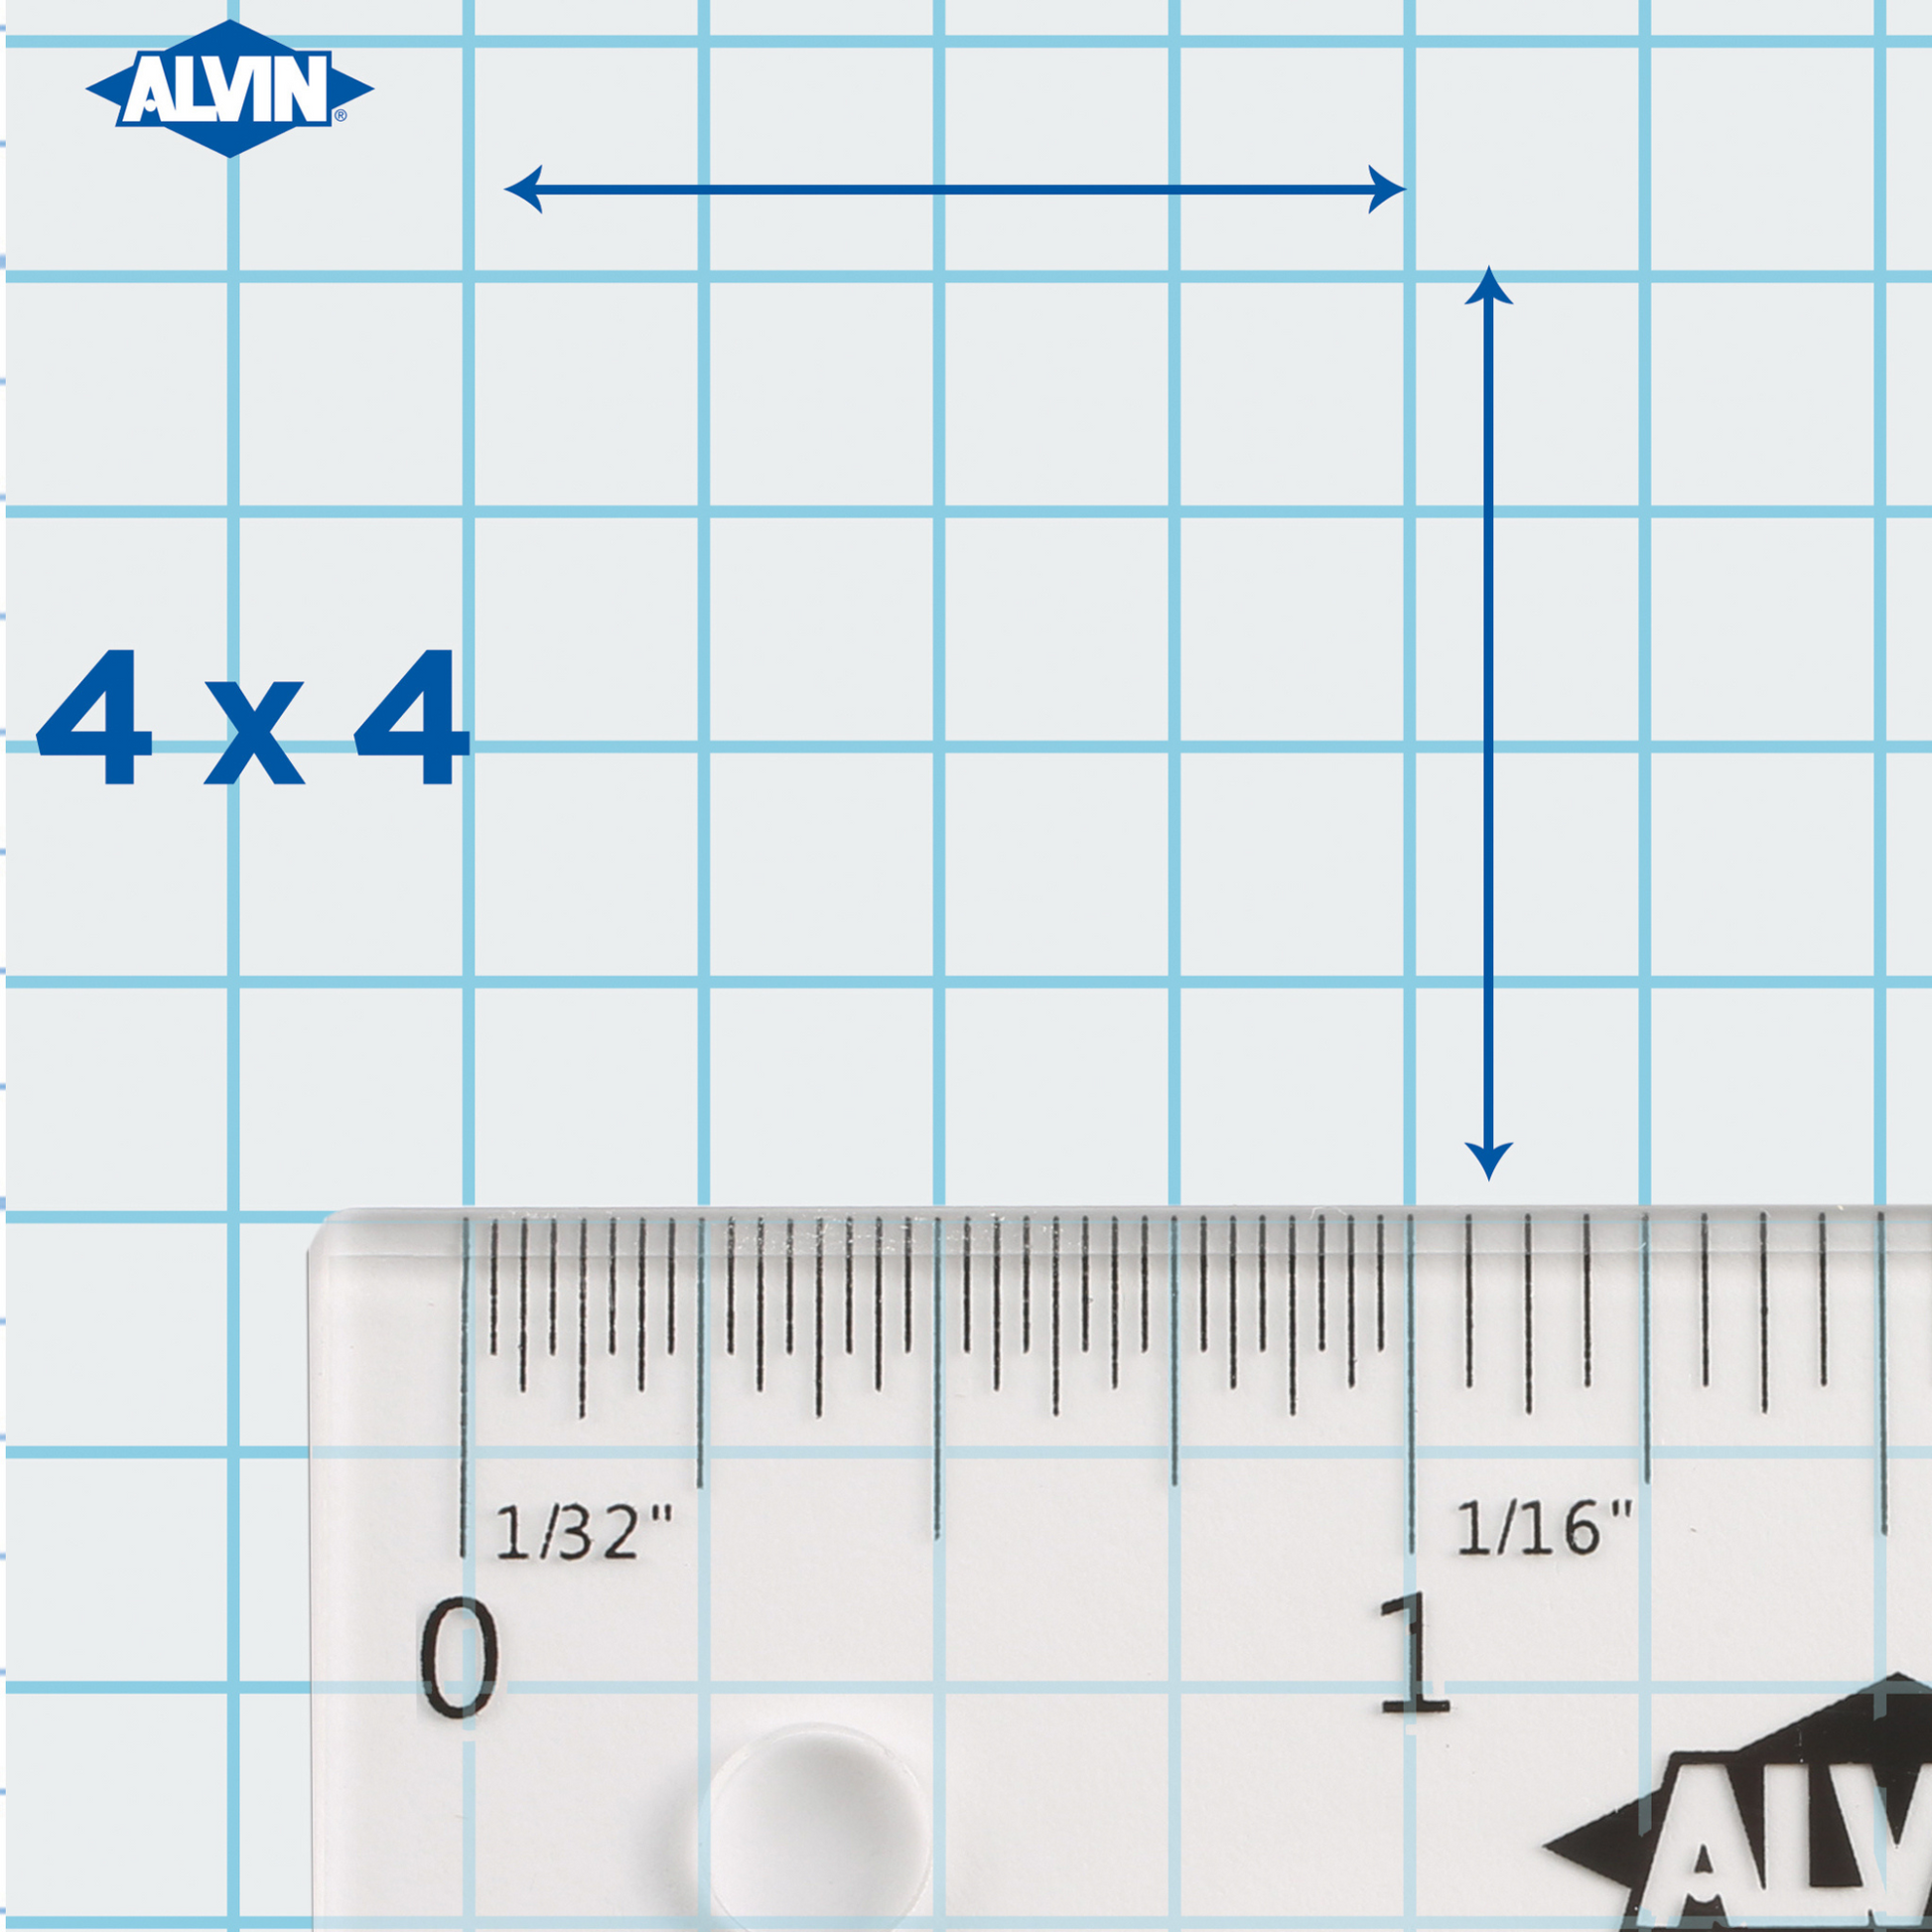 Arto A4 Graph Paper Pad 1PCS [1mm square, 80 gsm, 25 sheets]